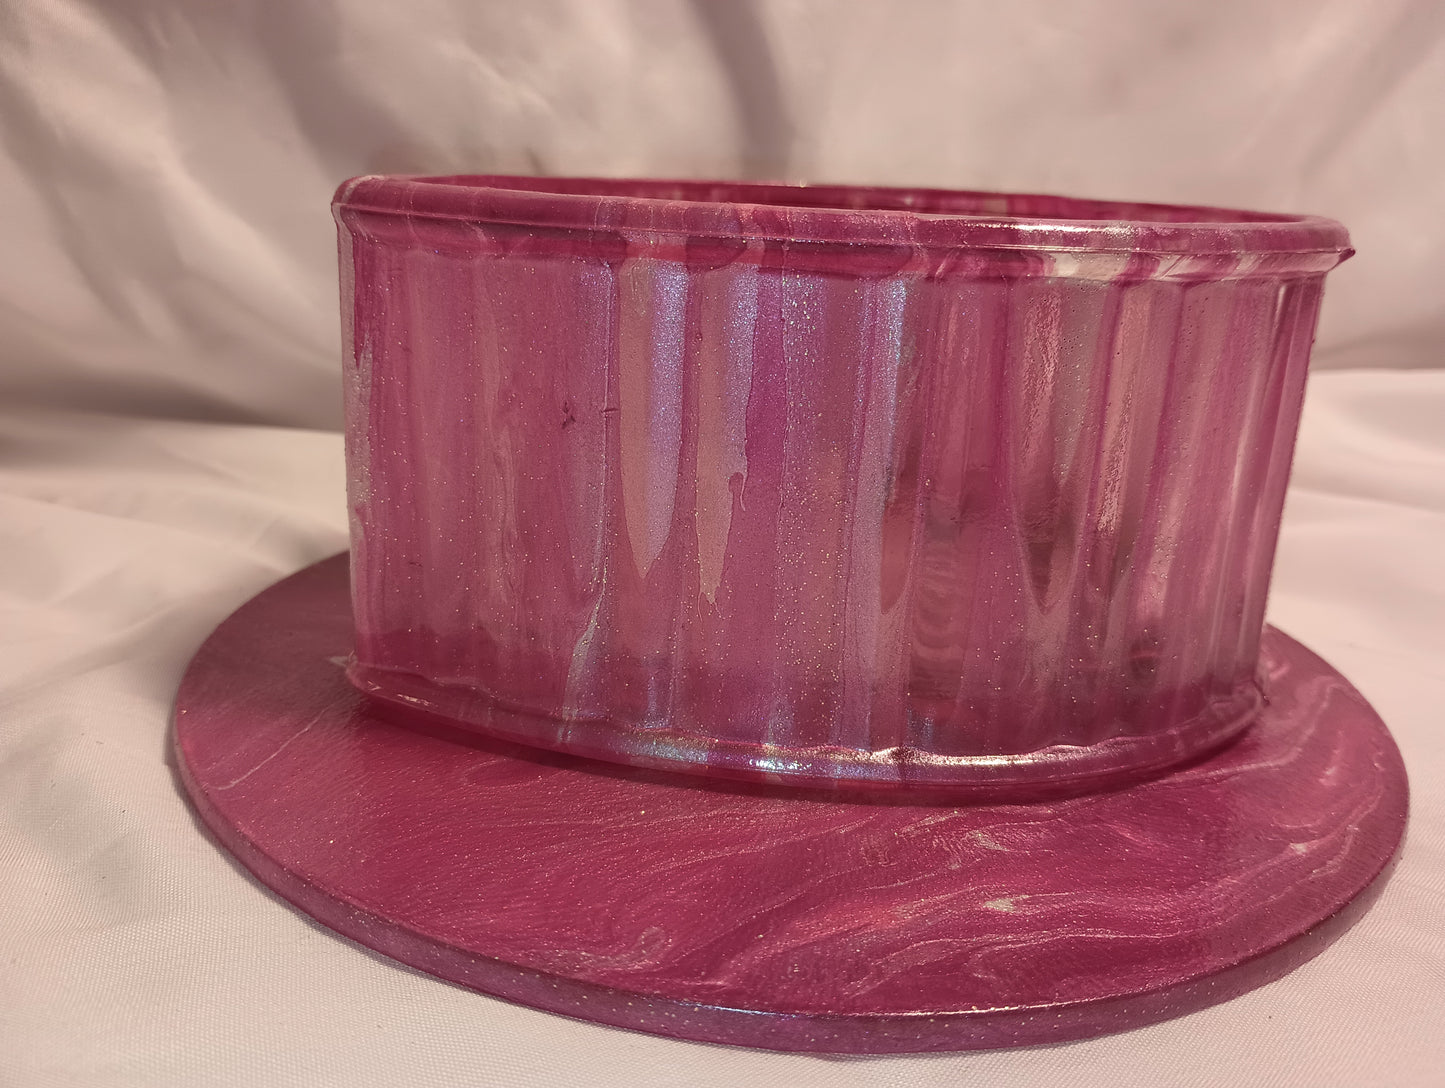 Rosey Valentine Fluid Art Bowl & accessory